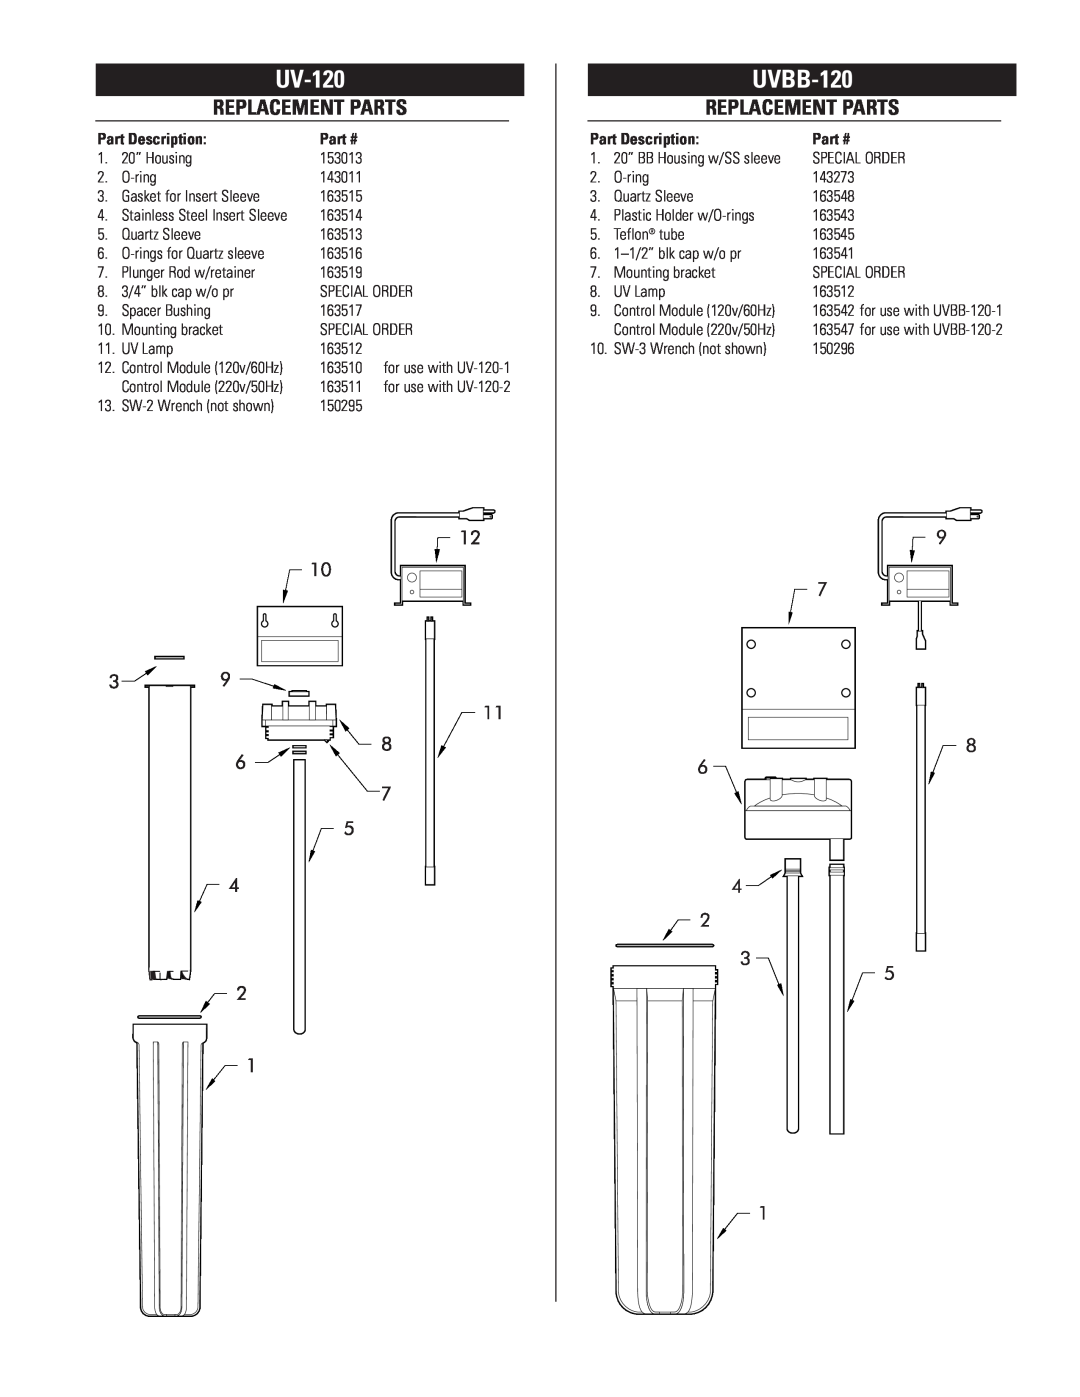 Pentair UV-110, UVS-110 specifications UV-120, UVBB-120, Replacement Parts, 7 6, Part Description 